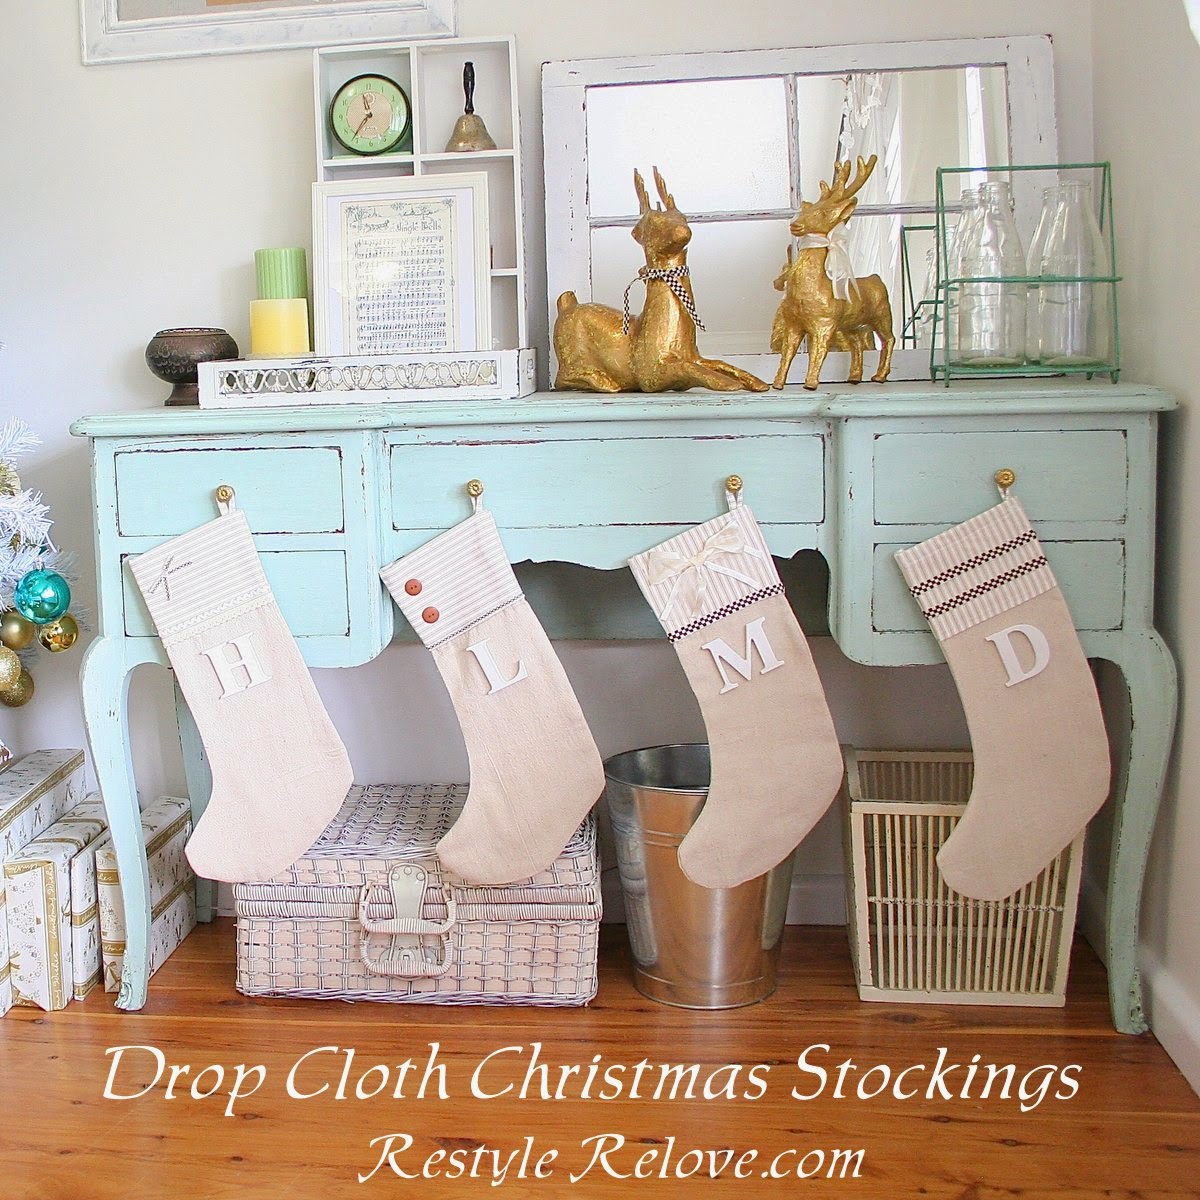 Drop cloth stockings